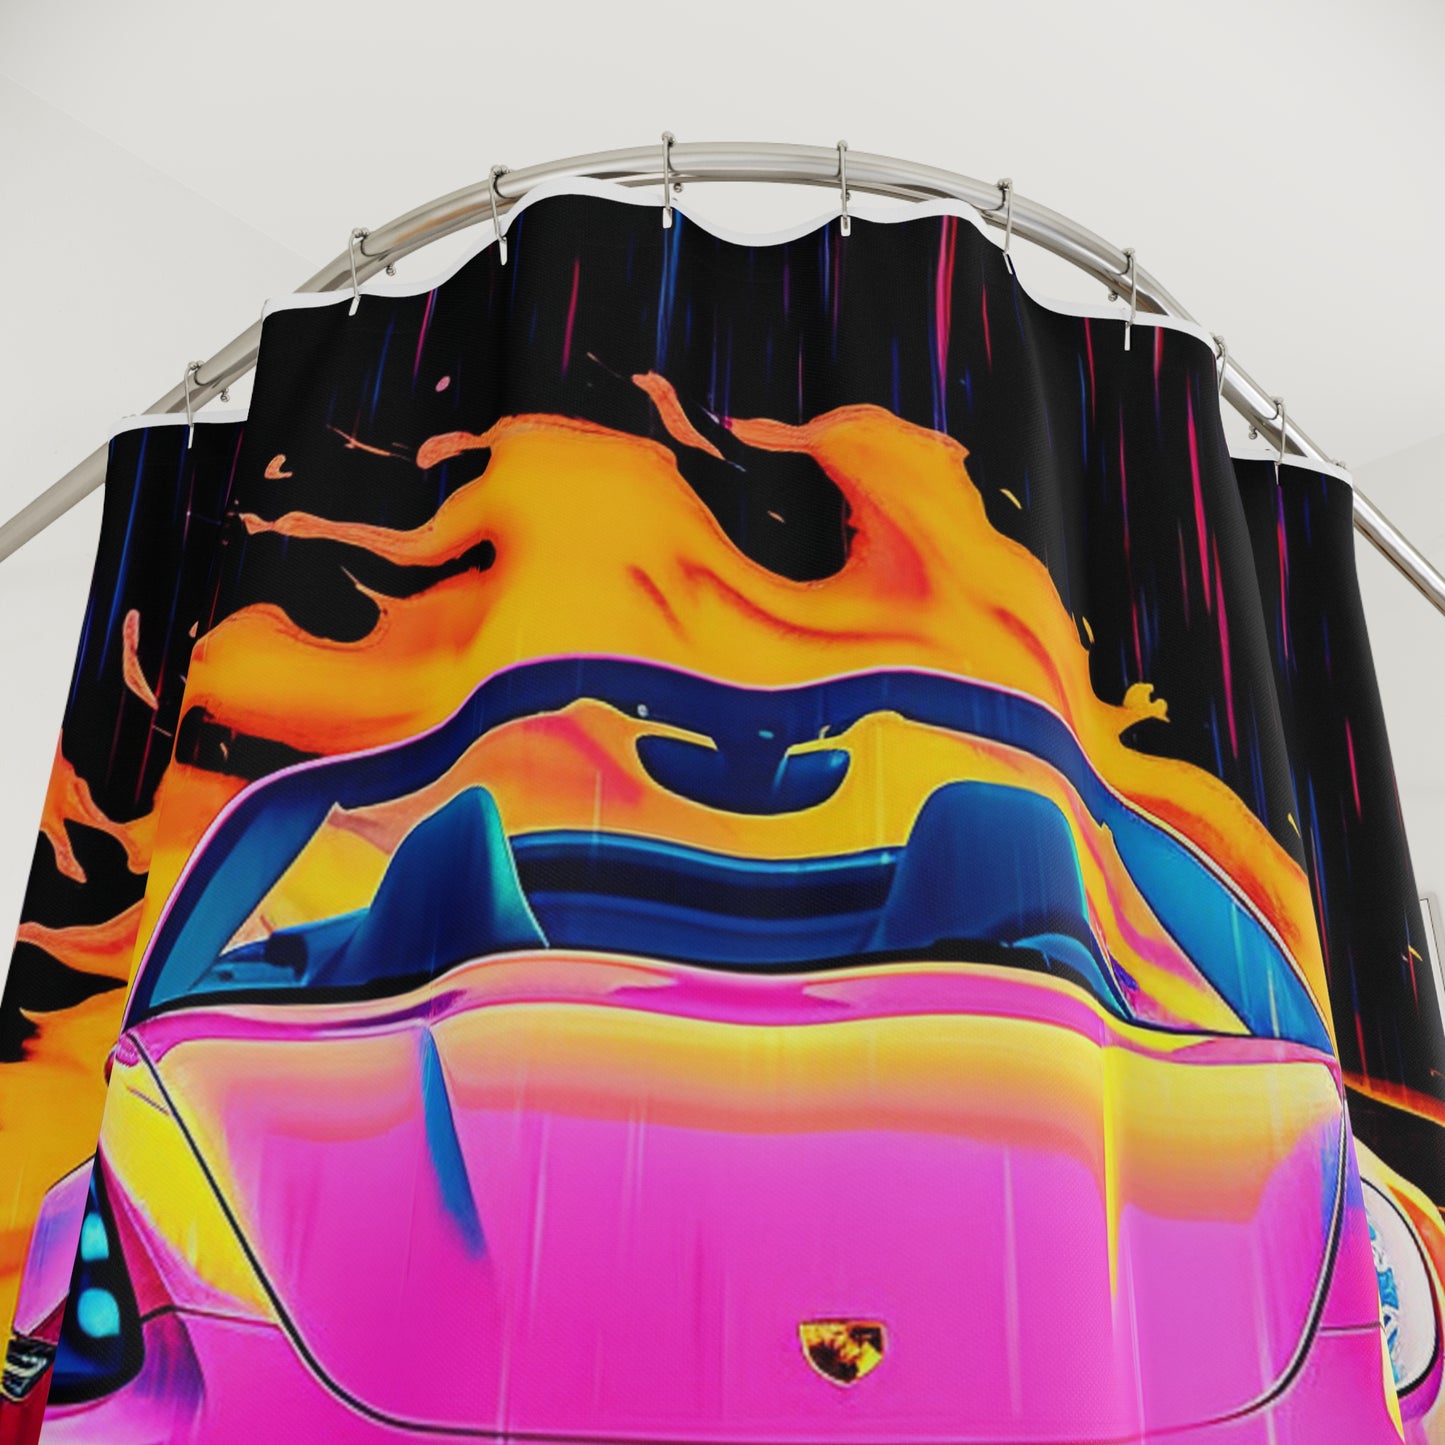 Polyester Shower Curtain Pink Porsche water fusion 1